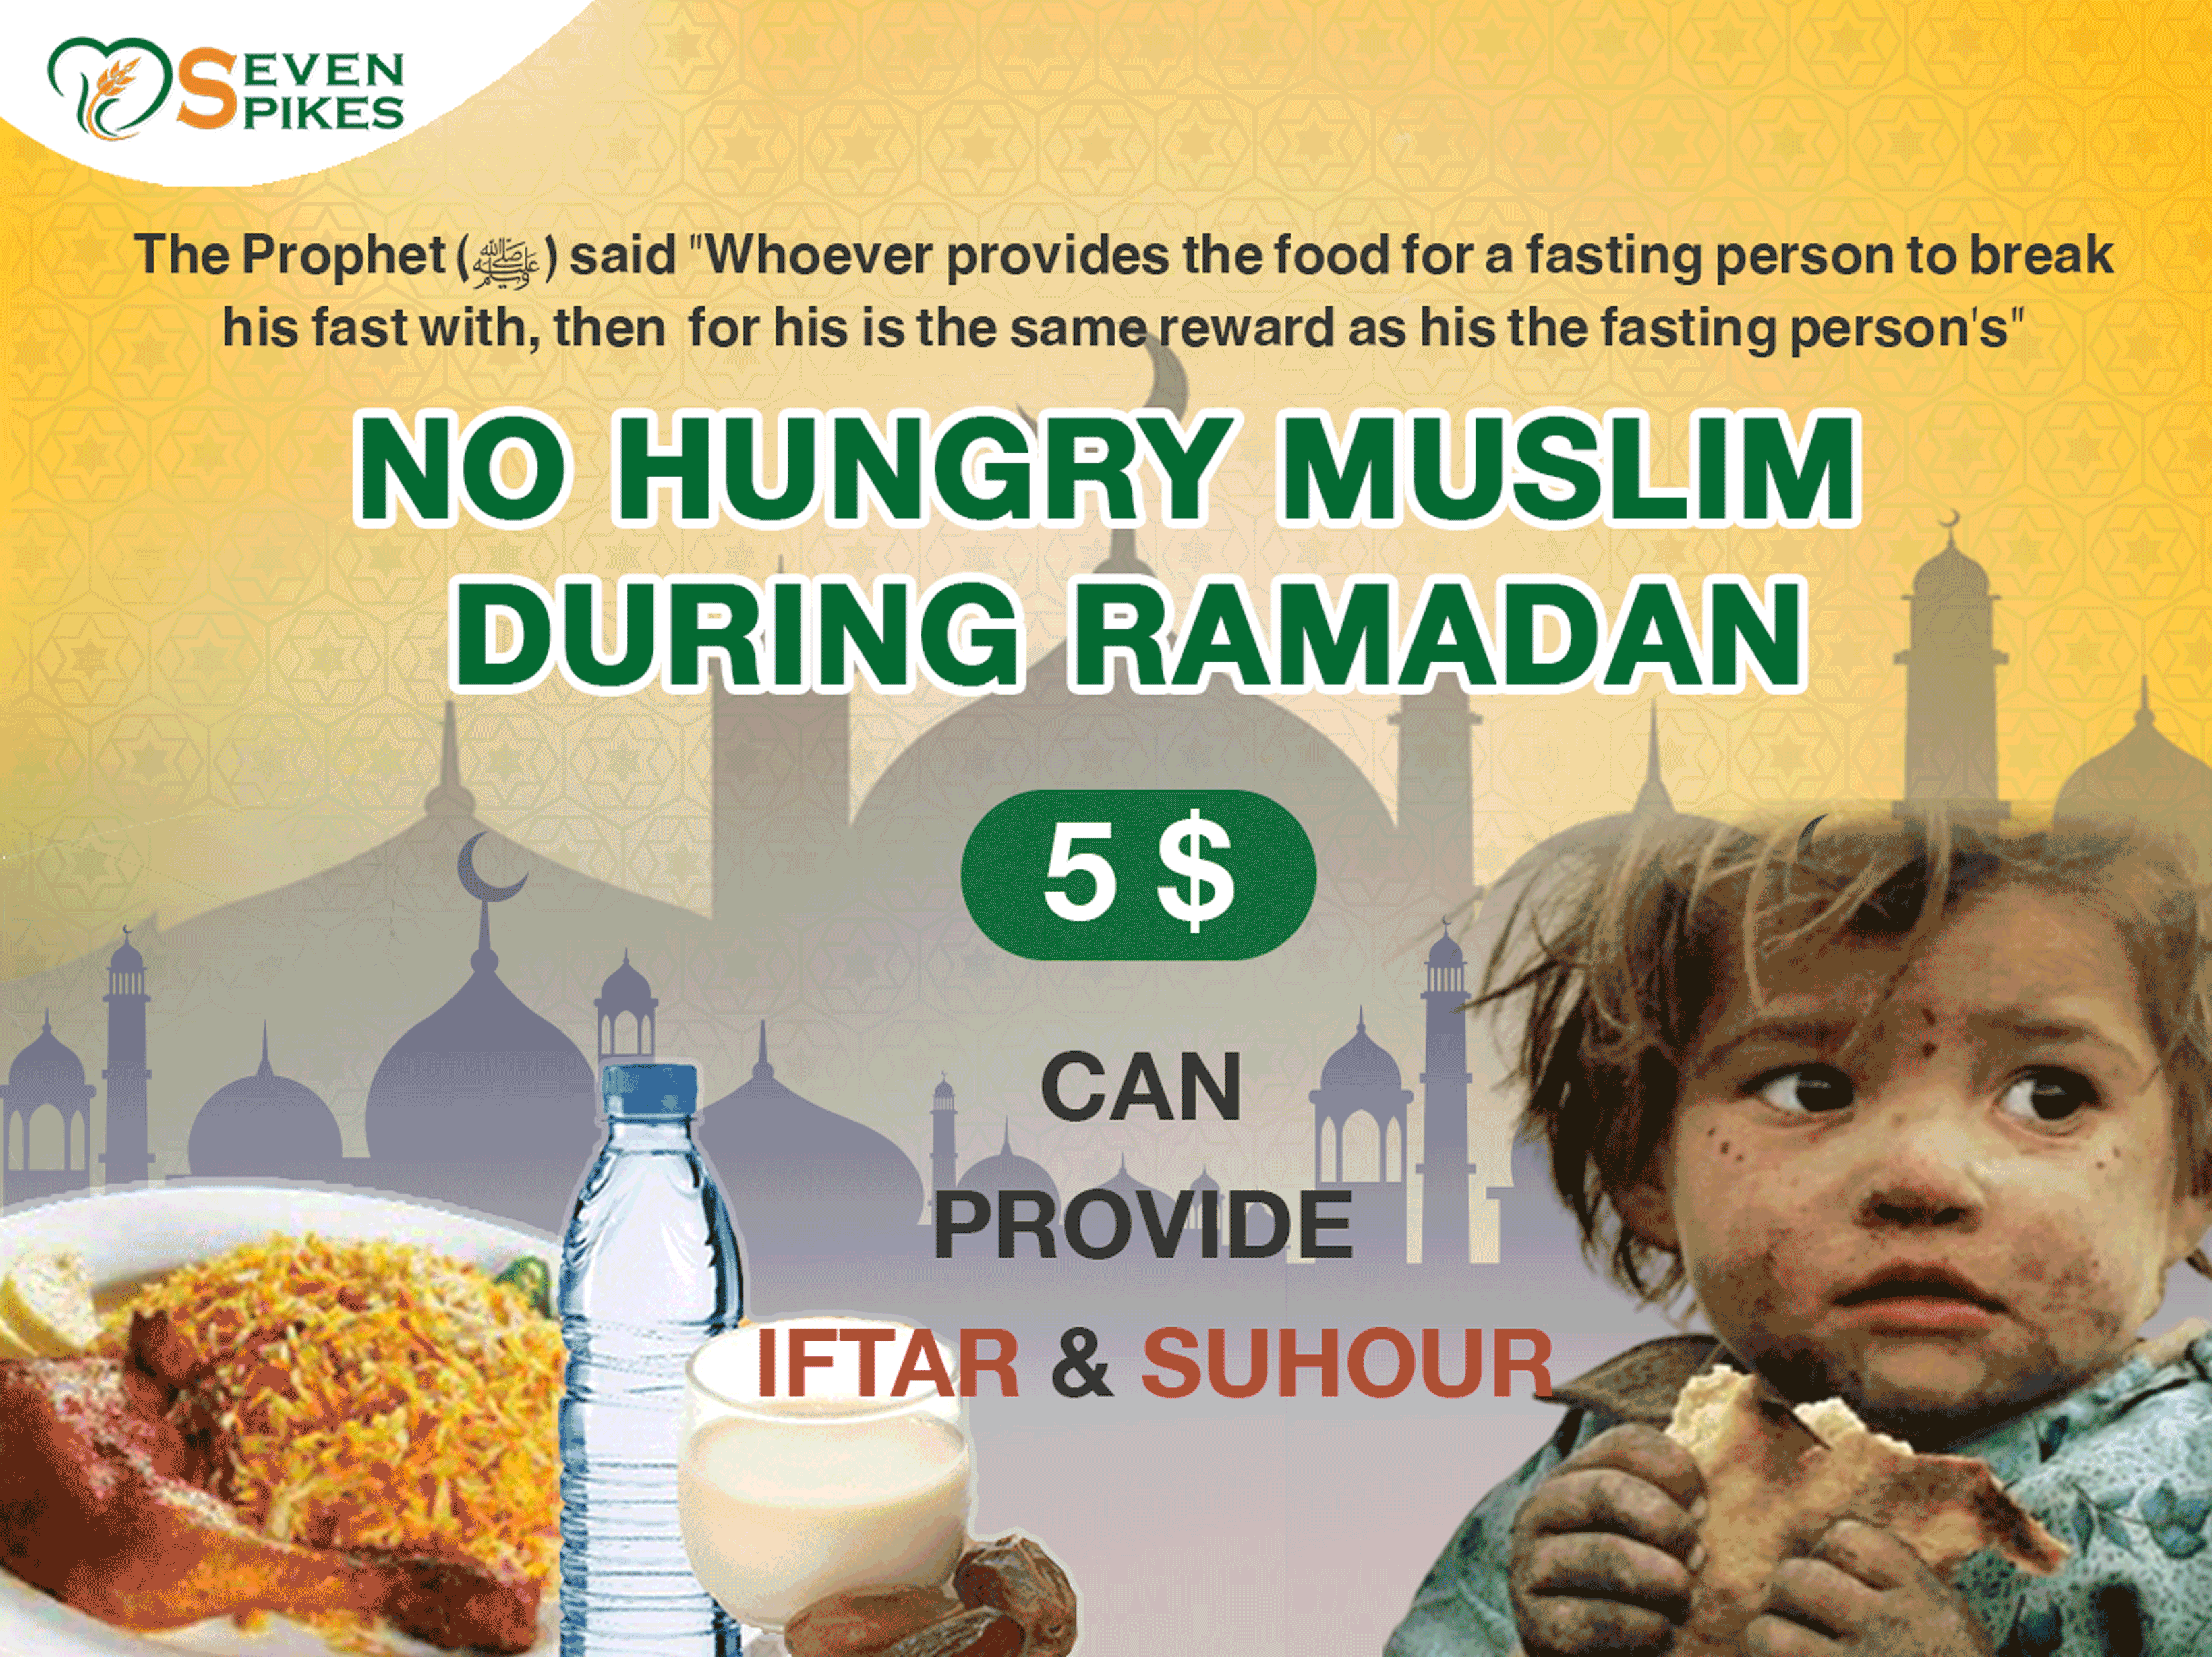 a 15rm providing Iftar & Suhour for needy Muslims during Ramadan